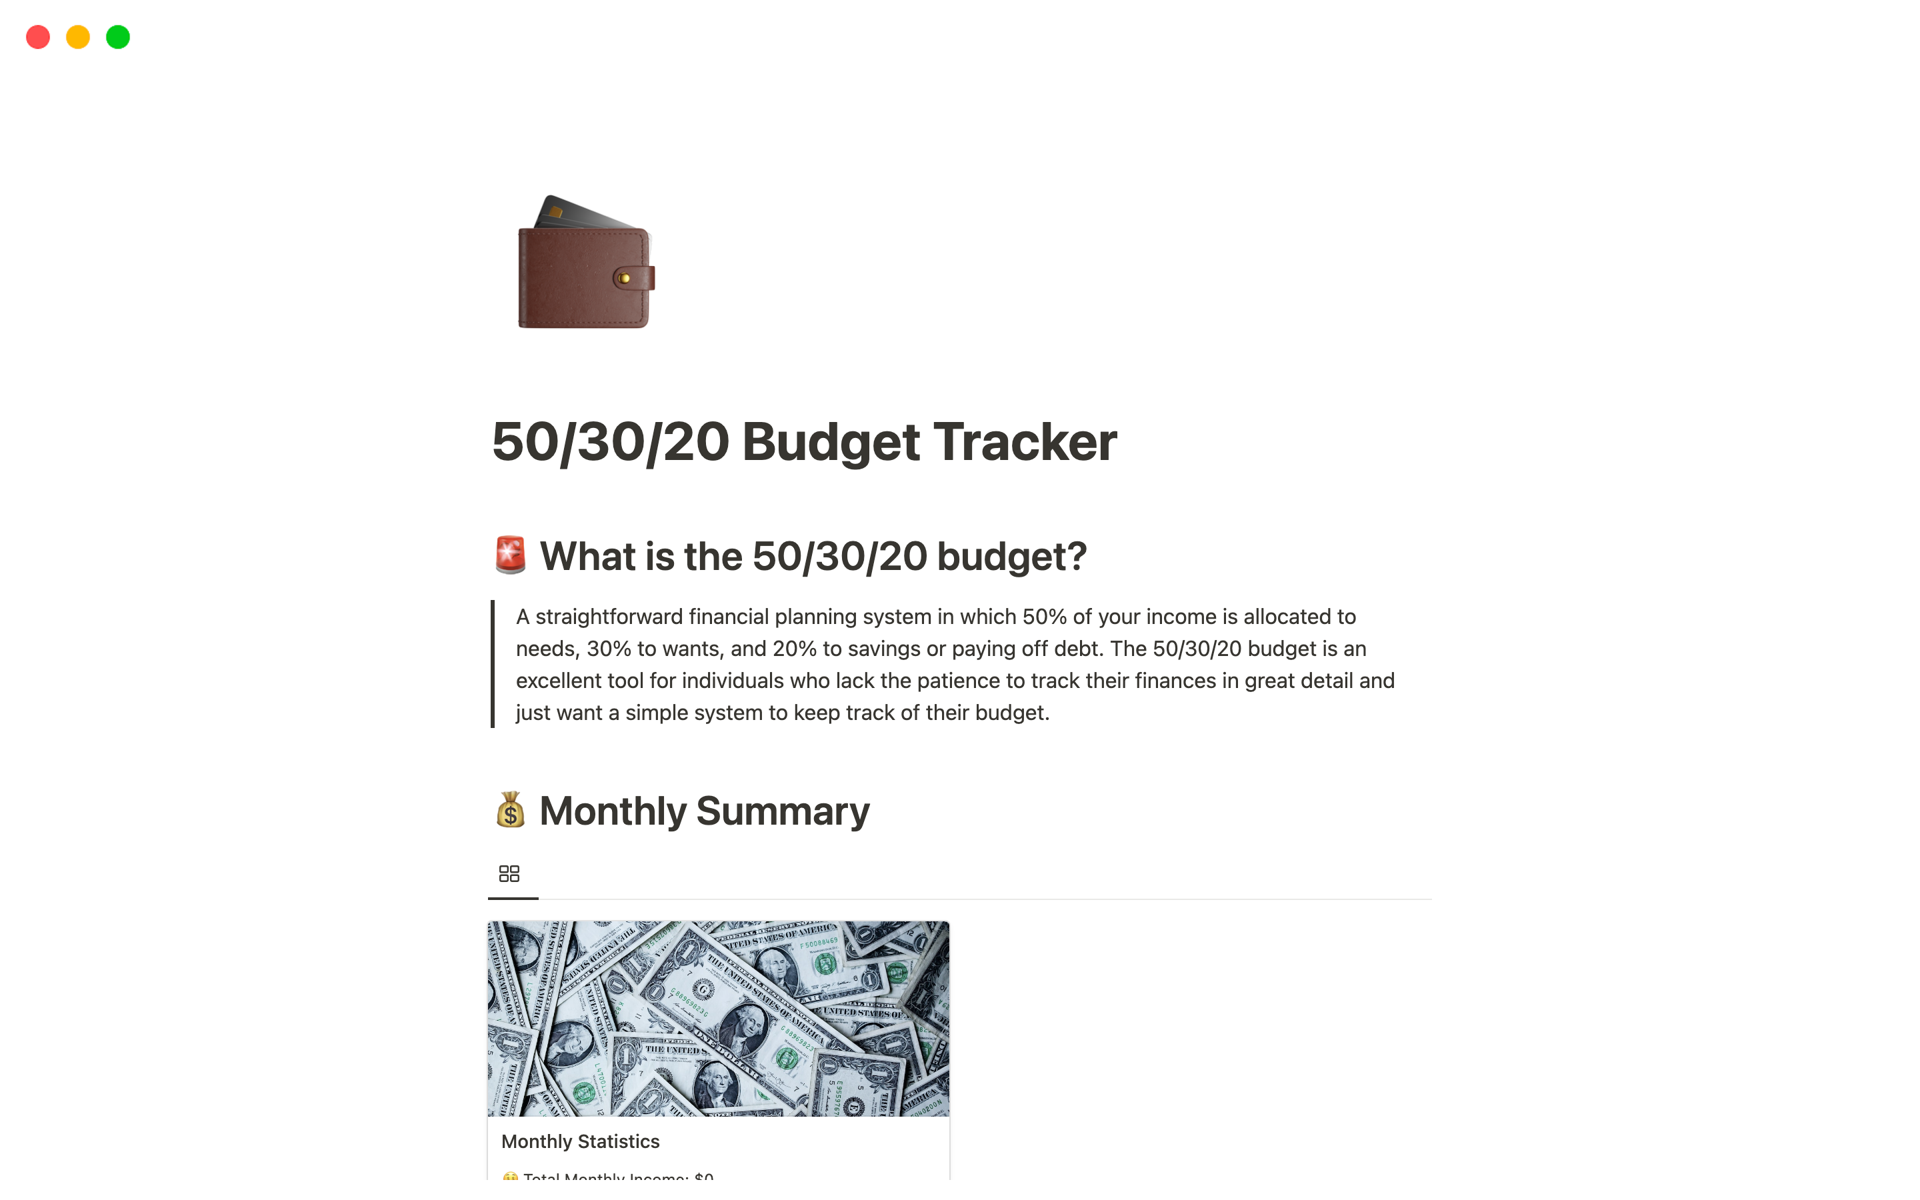 Aperçu du modèle de 50/30/20 budget tracker